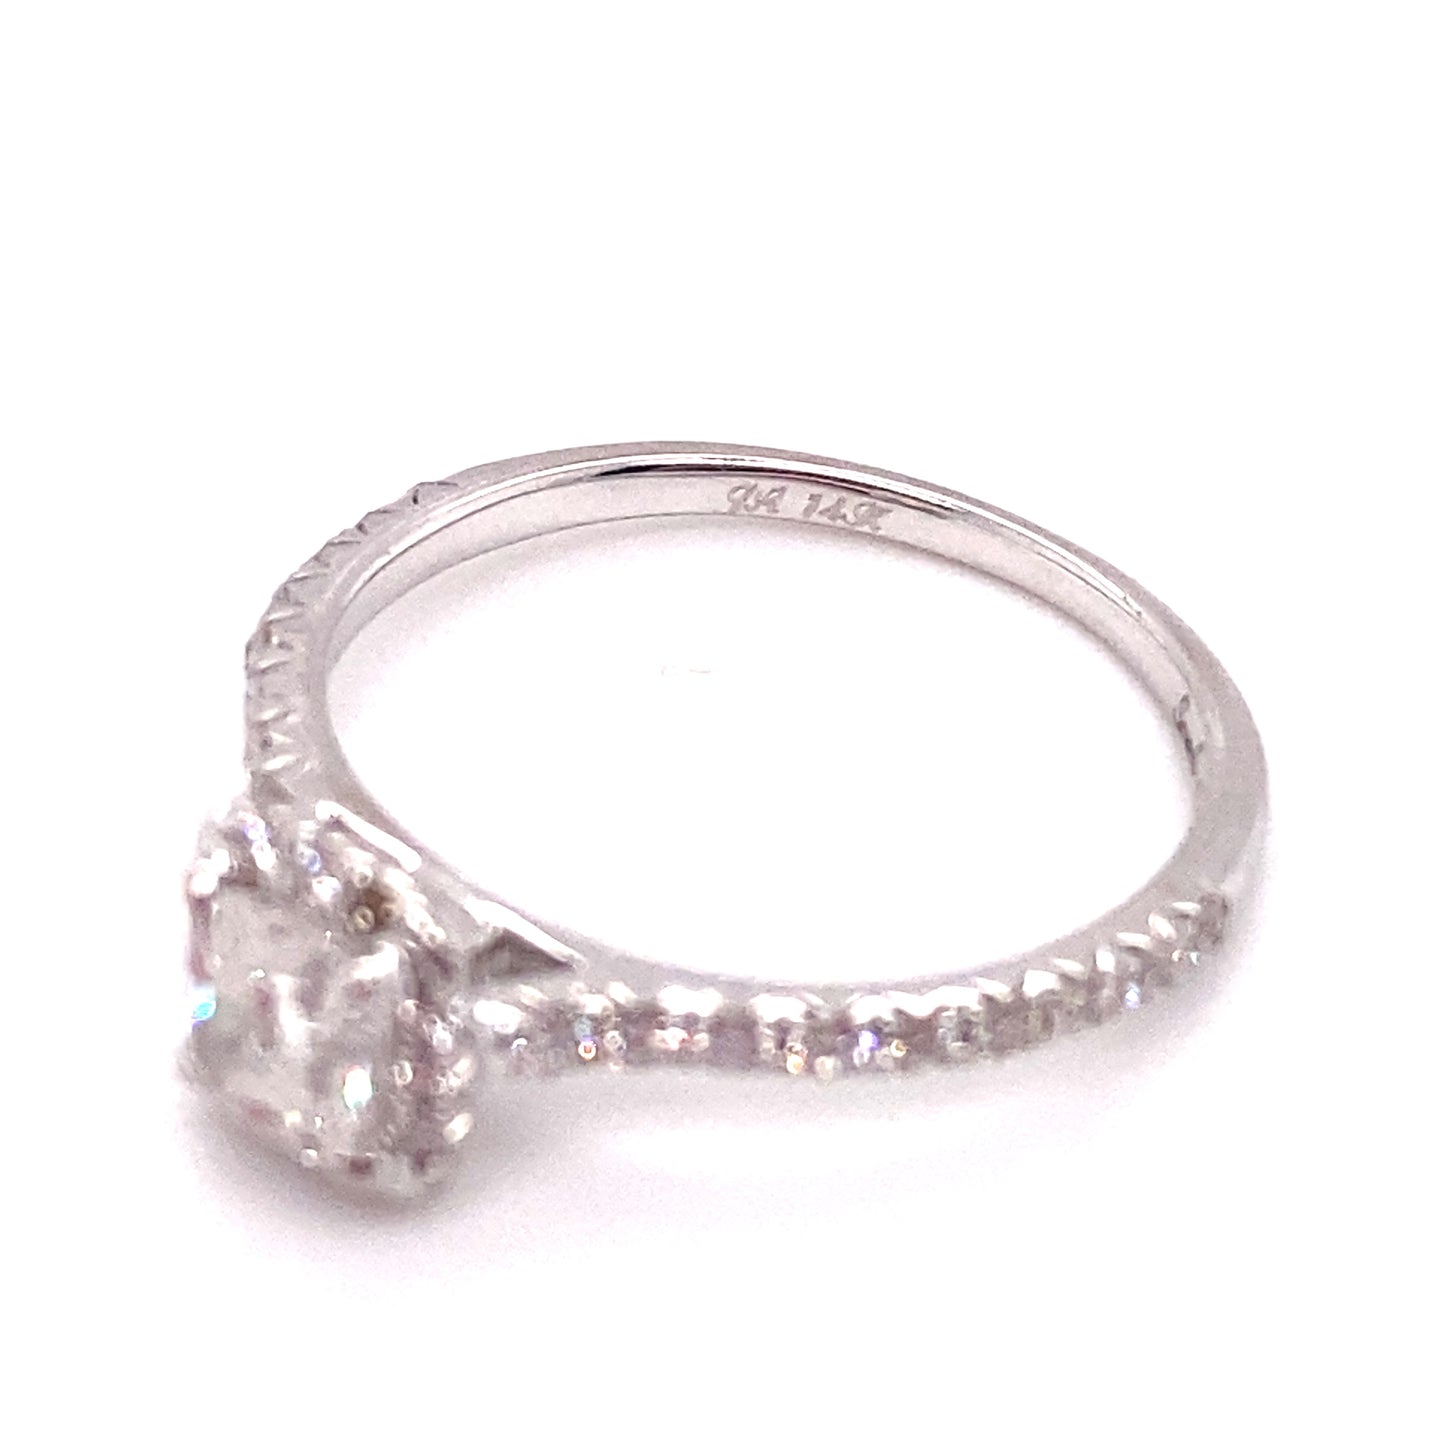 Circa 1990s 0.50ct Cushion Cut Diamond Halo Engagement Ring in 14K White Gold